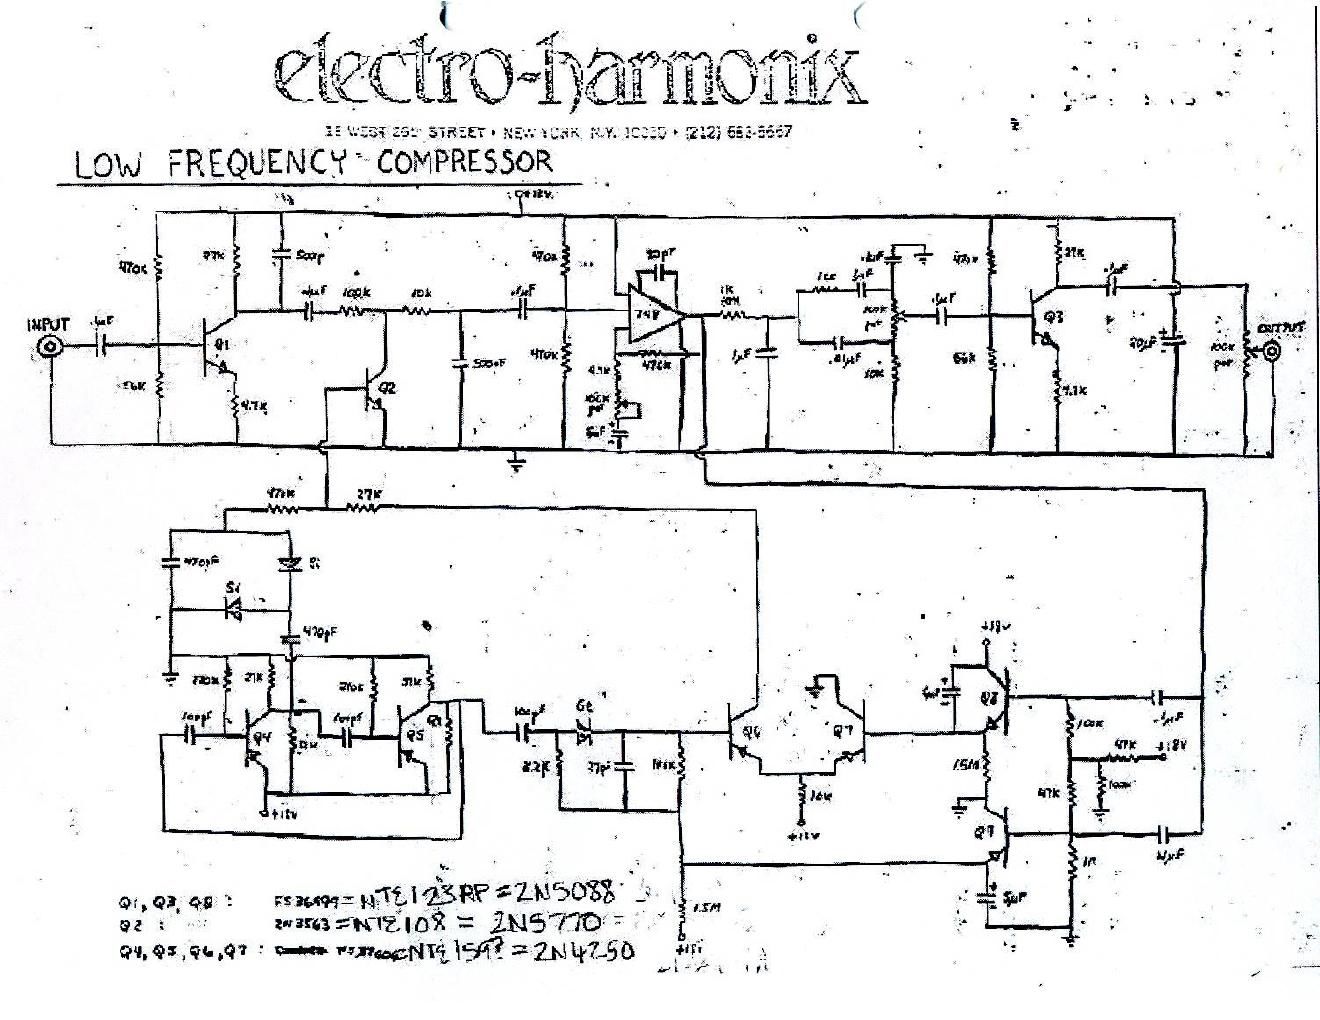 electro harmonix low frequency compressor schematic